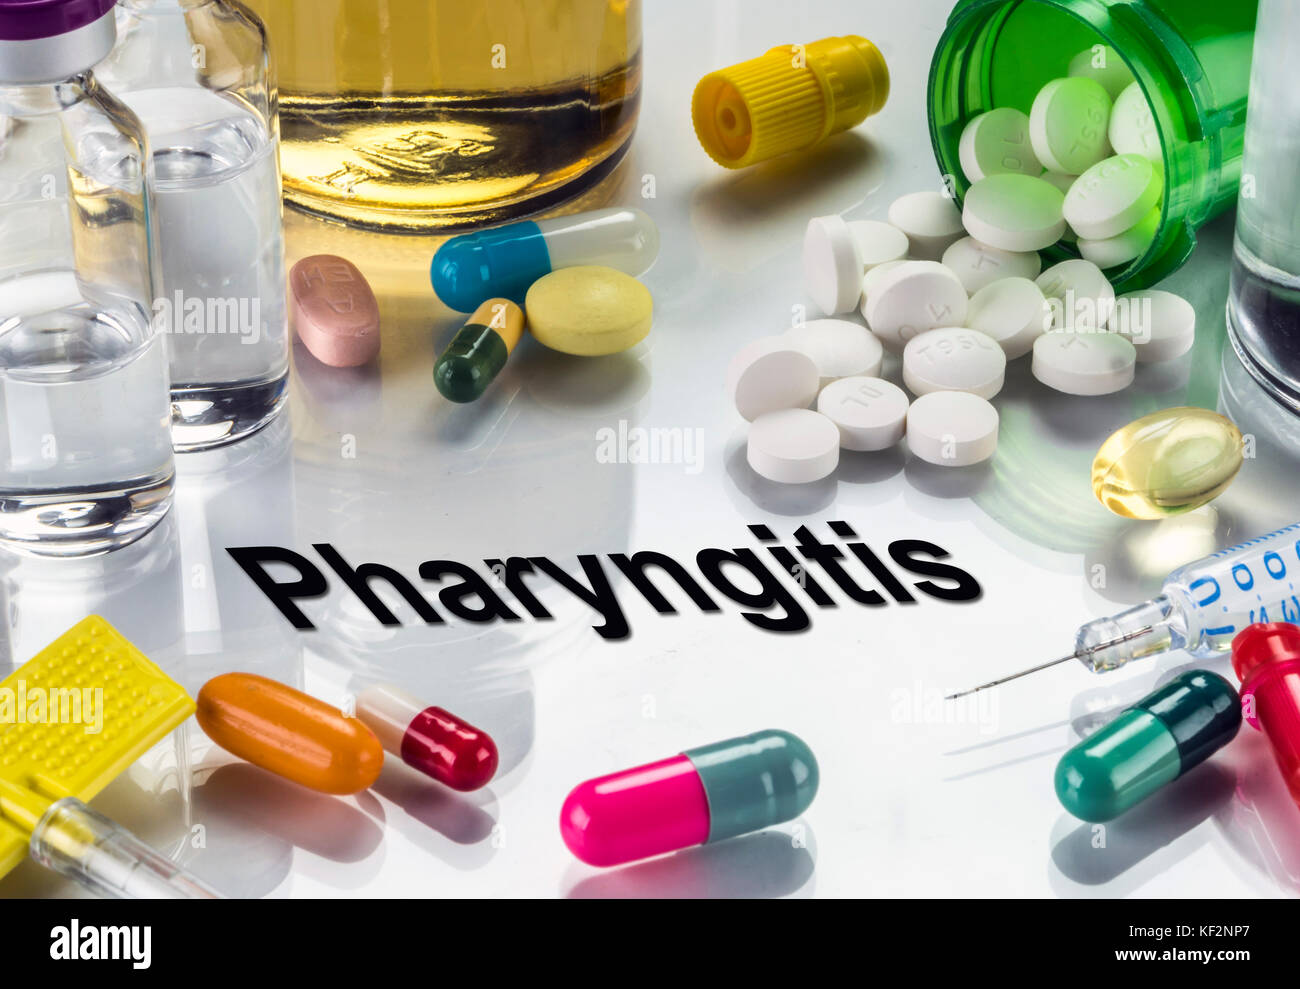 Pharyngitis, medicines as concept of ordinary treatment, conceptual image Stock Photo